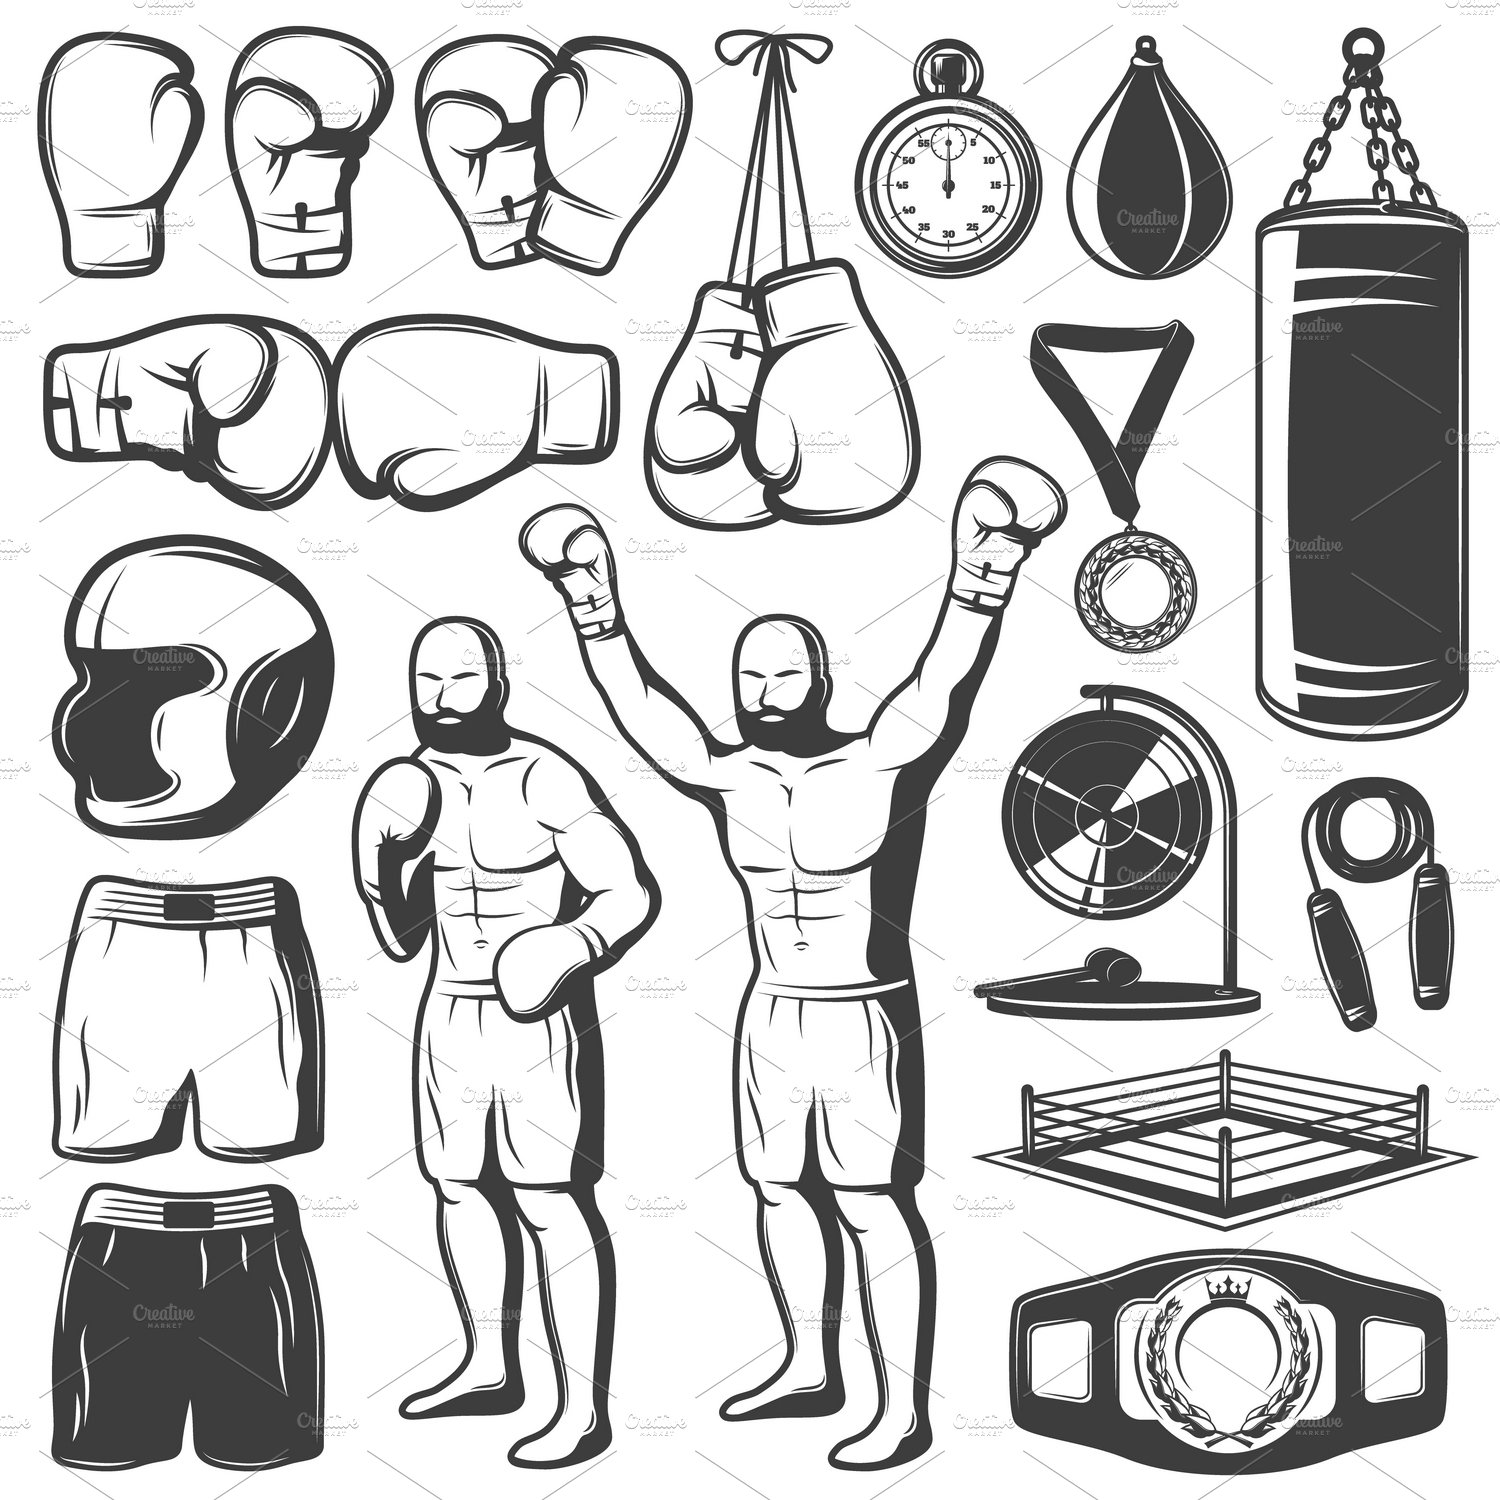 Boxing Black White Elements Set cover image.